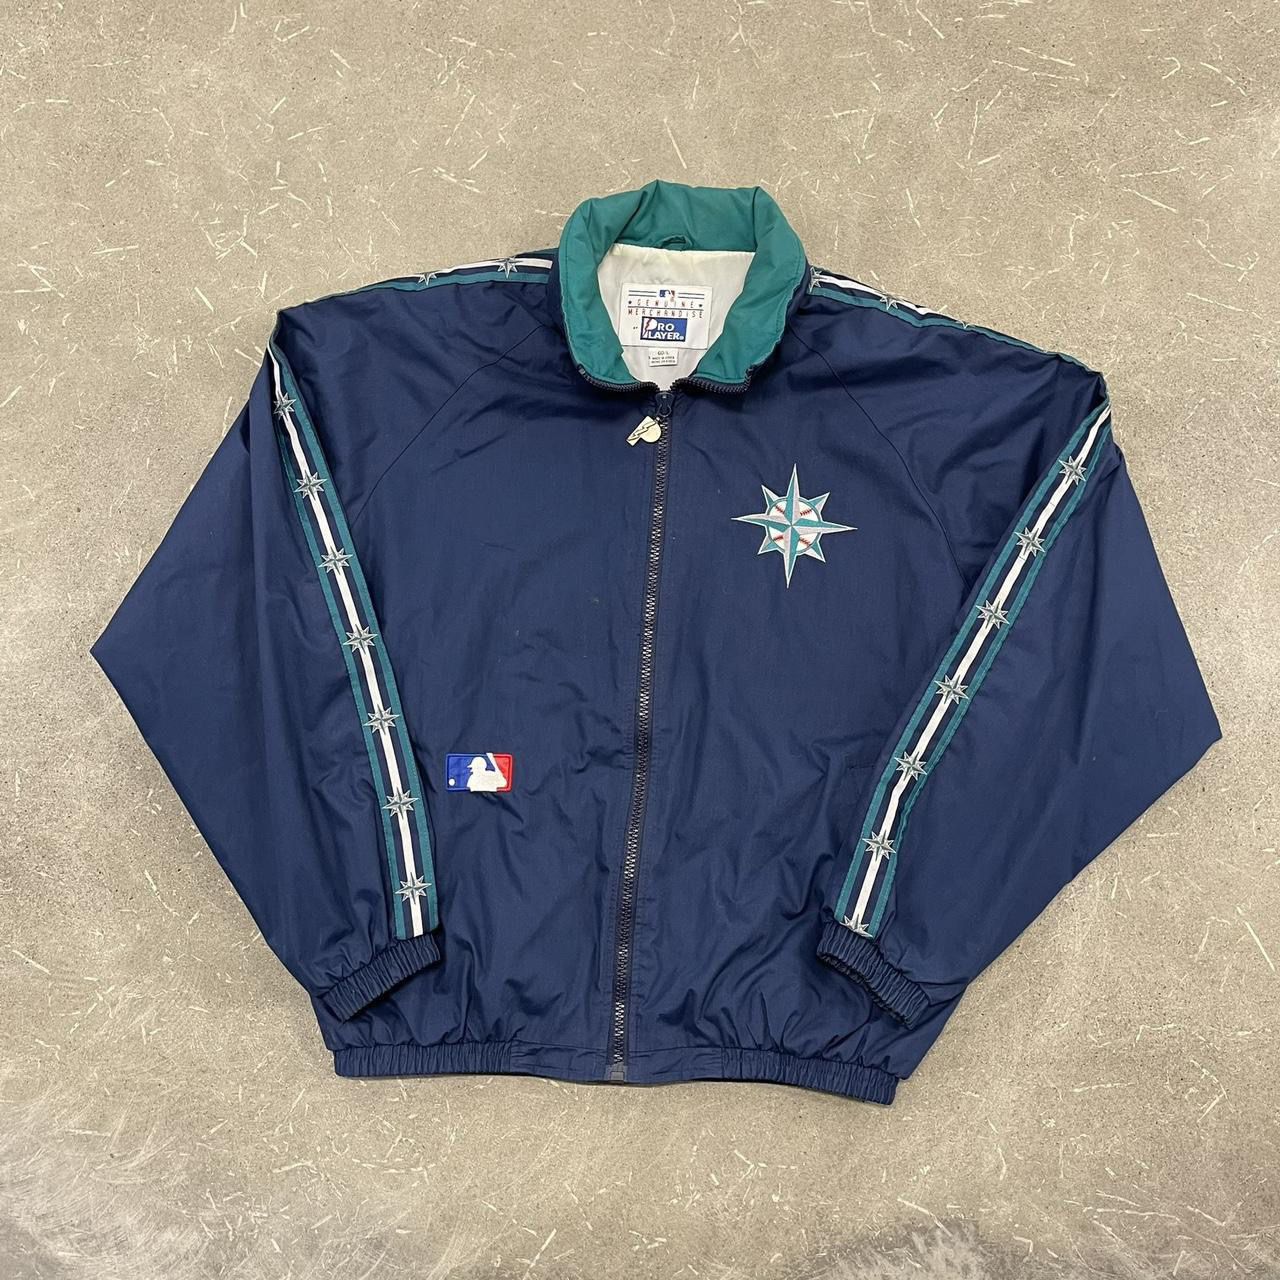 Vintage 90s Seattle Mariners Pro Player Full Zip Jacket 